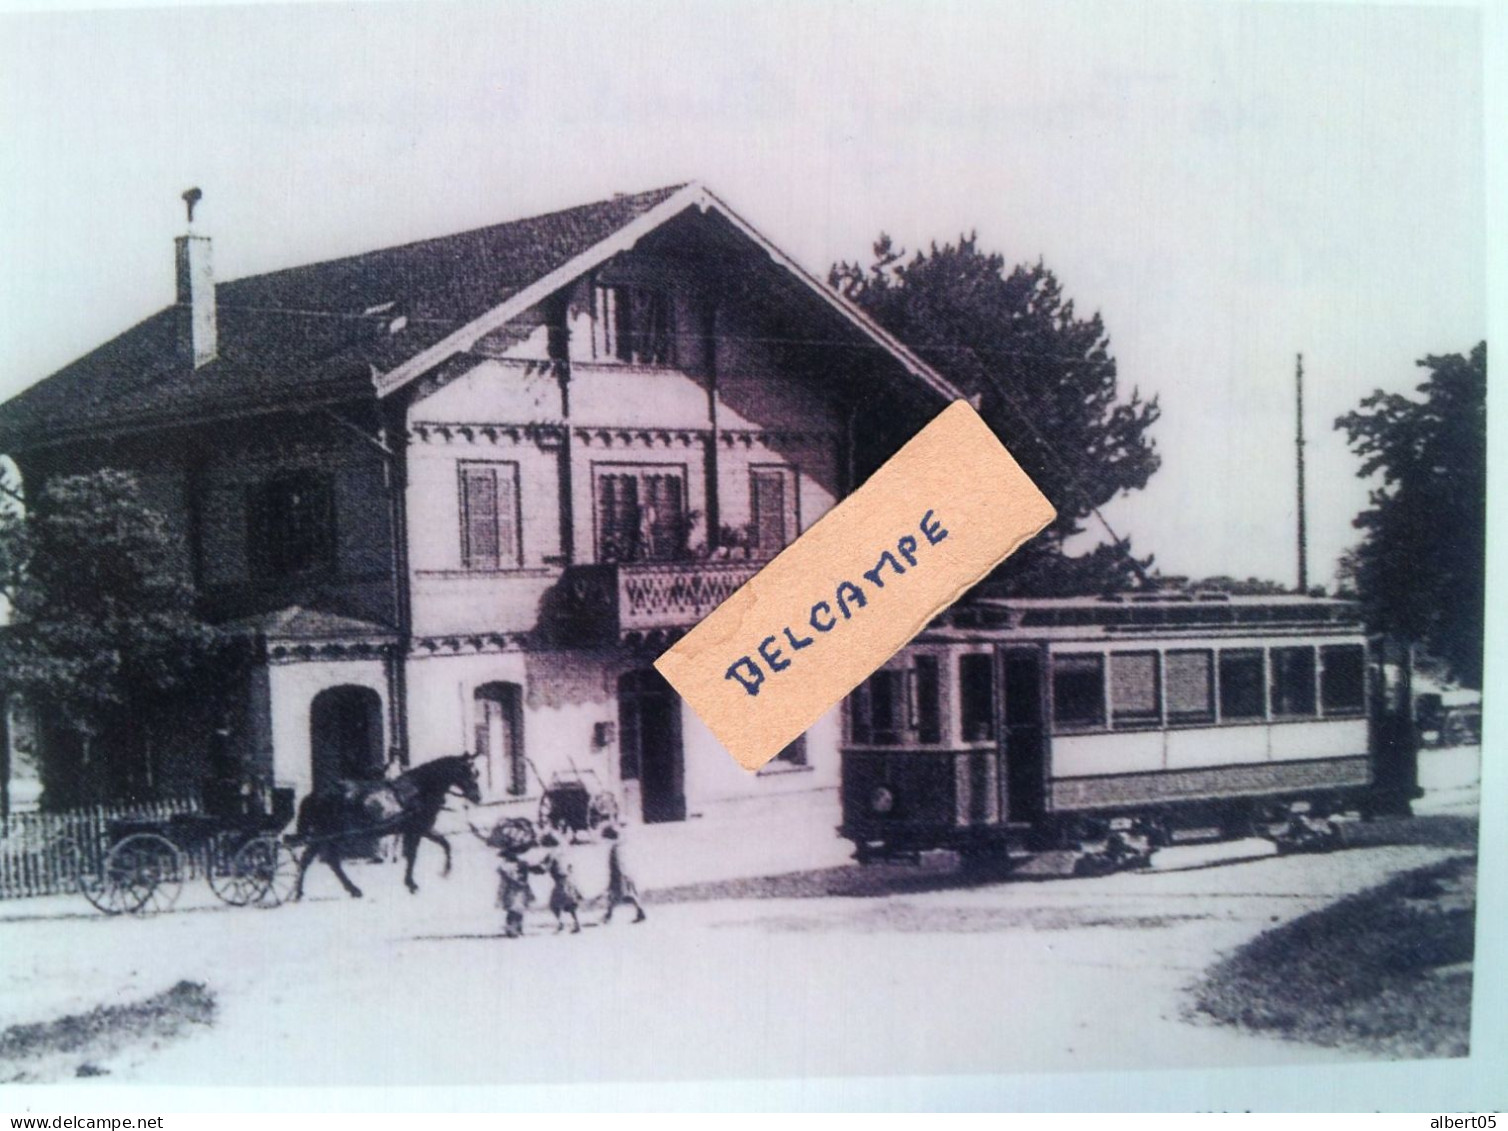 Le Tramway Gland-Begnins - Gare De Gland - Le Tram Part Vers Gland-Village En 1906 - Reproduction - Gland